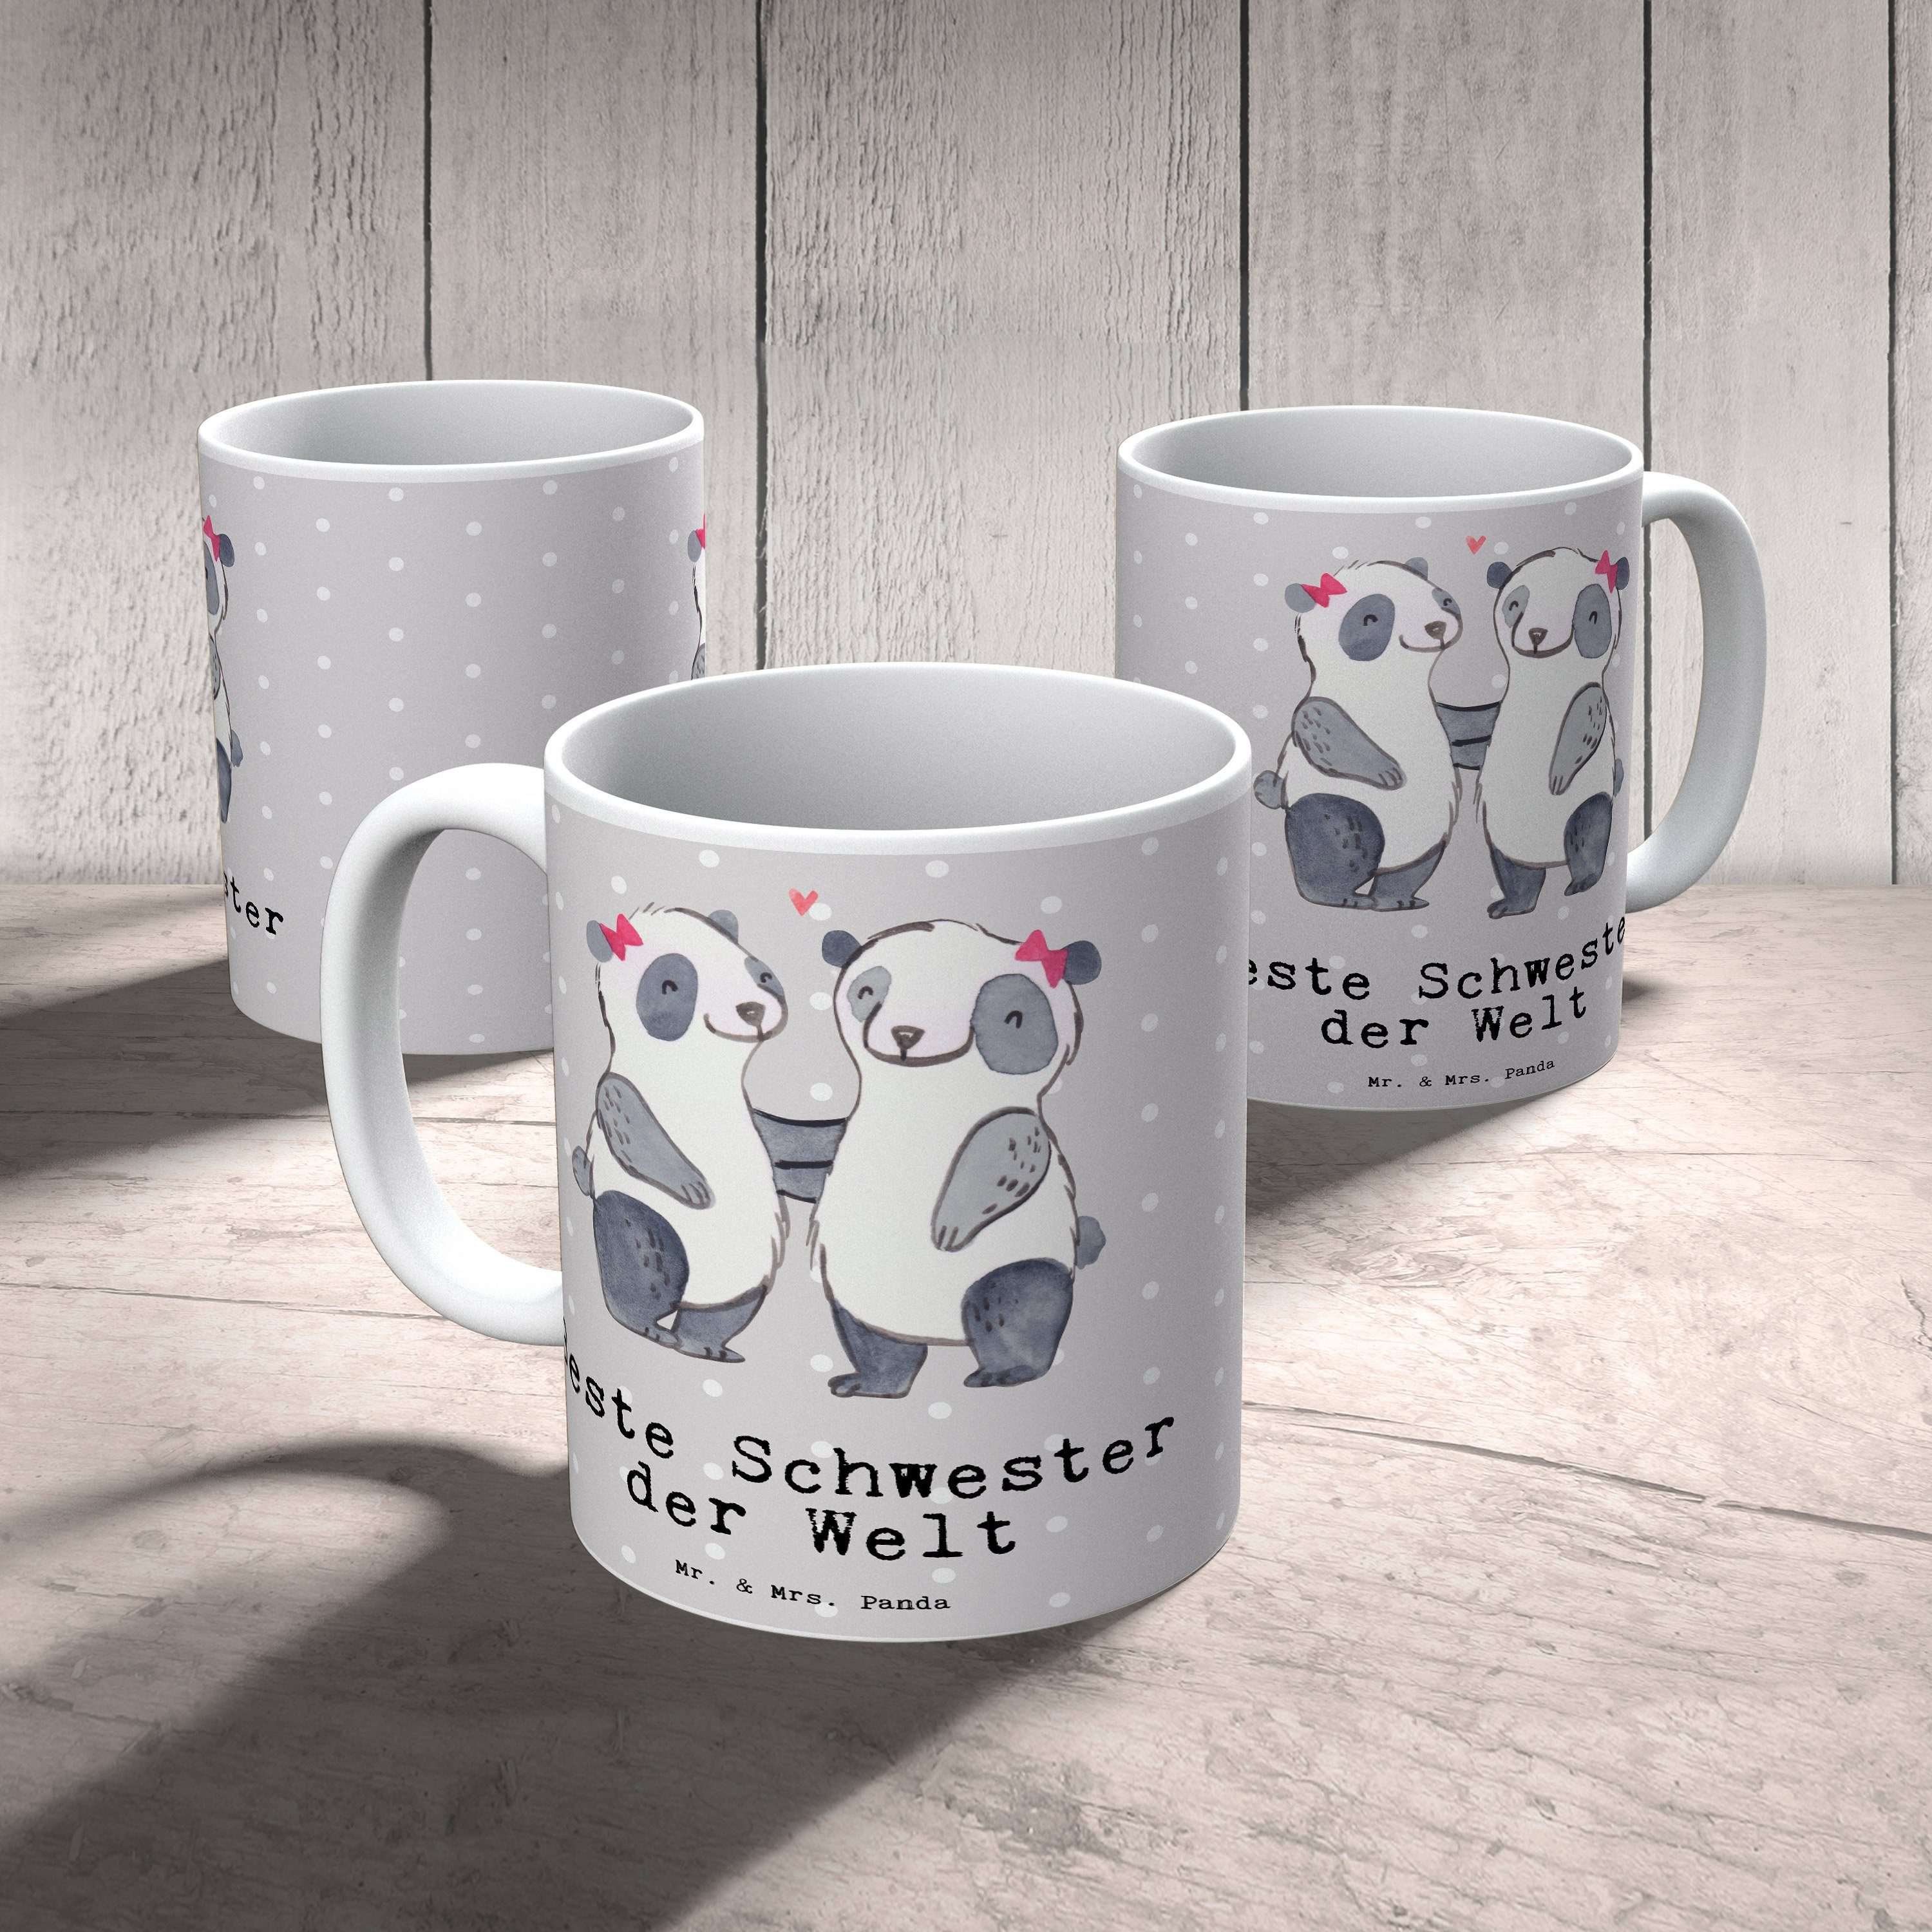 Beste Mr. Geburtstags, Keramik & Tasse - Panda Pastell Grau Welt Panda Schwester Mrs. Geschenk, - der